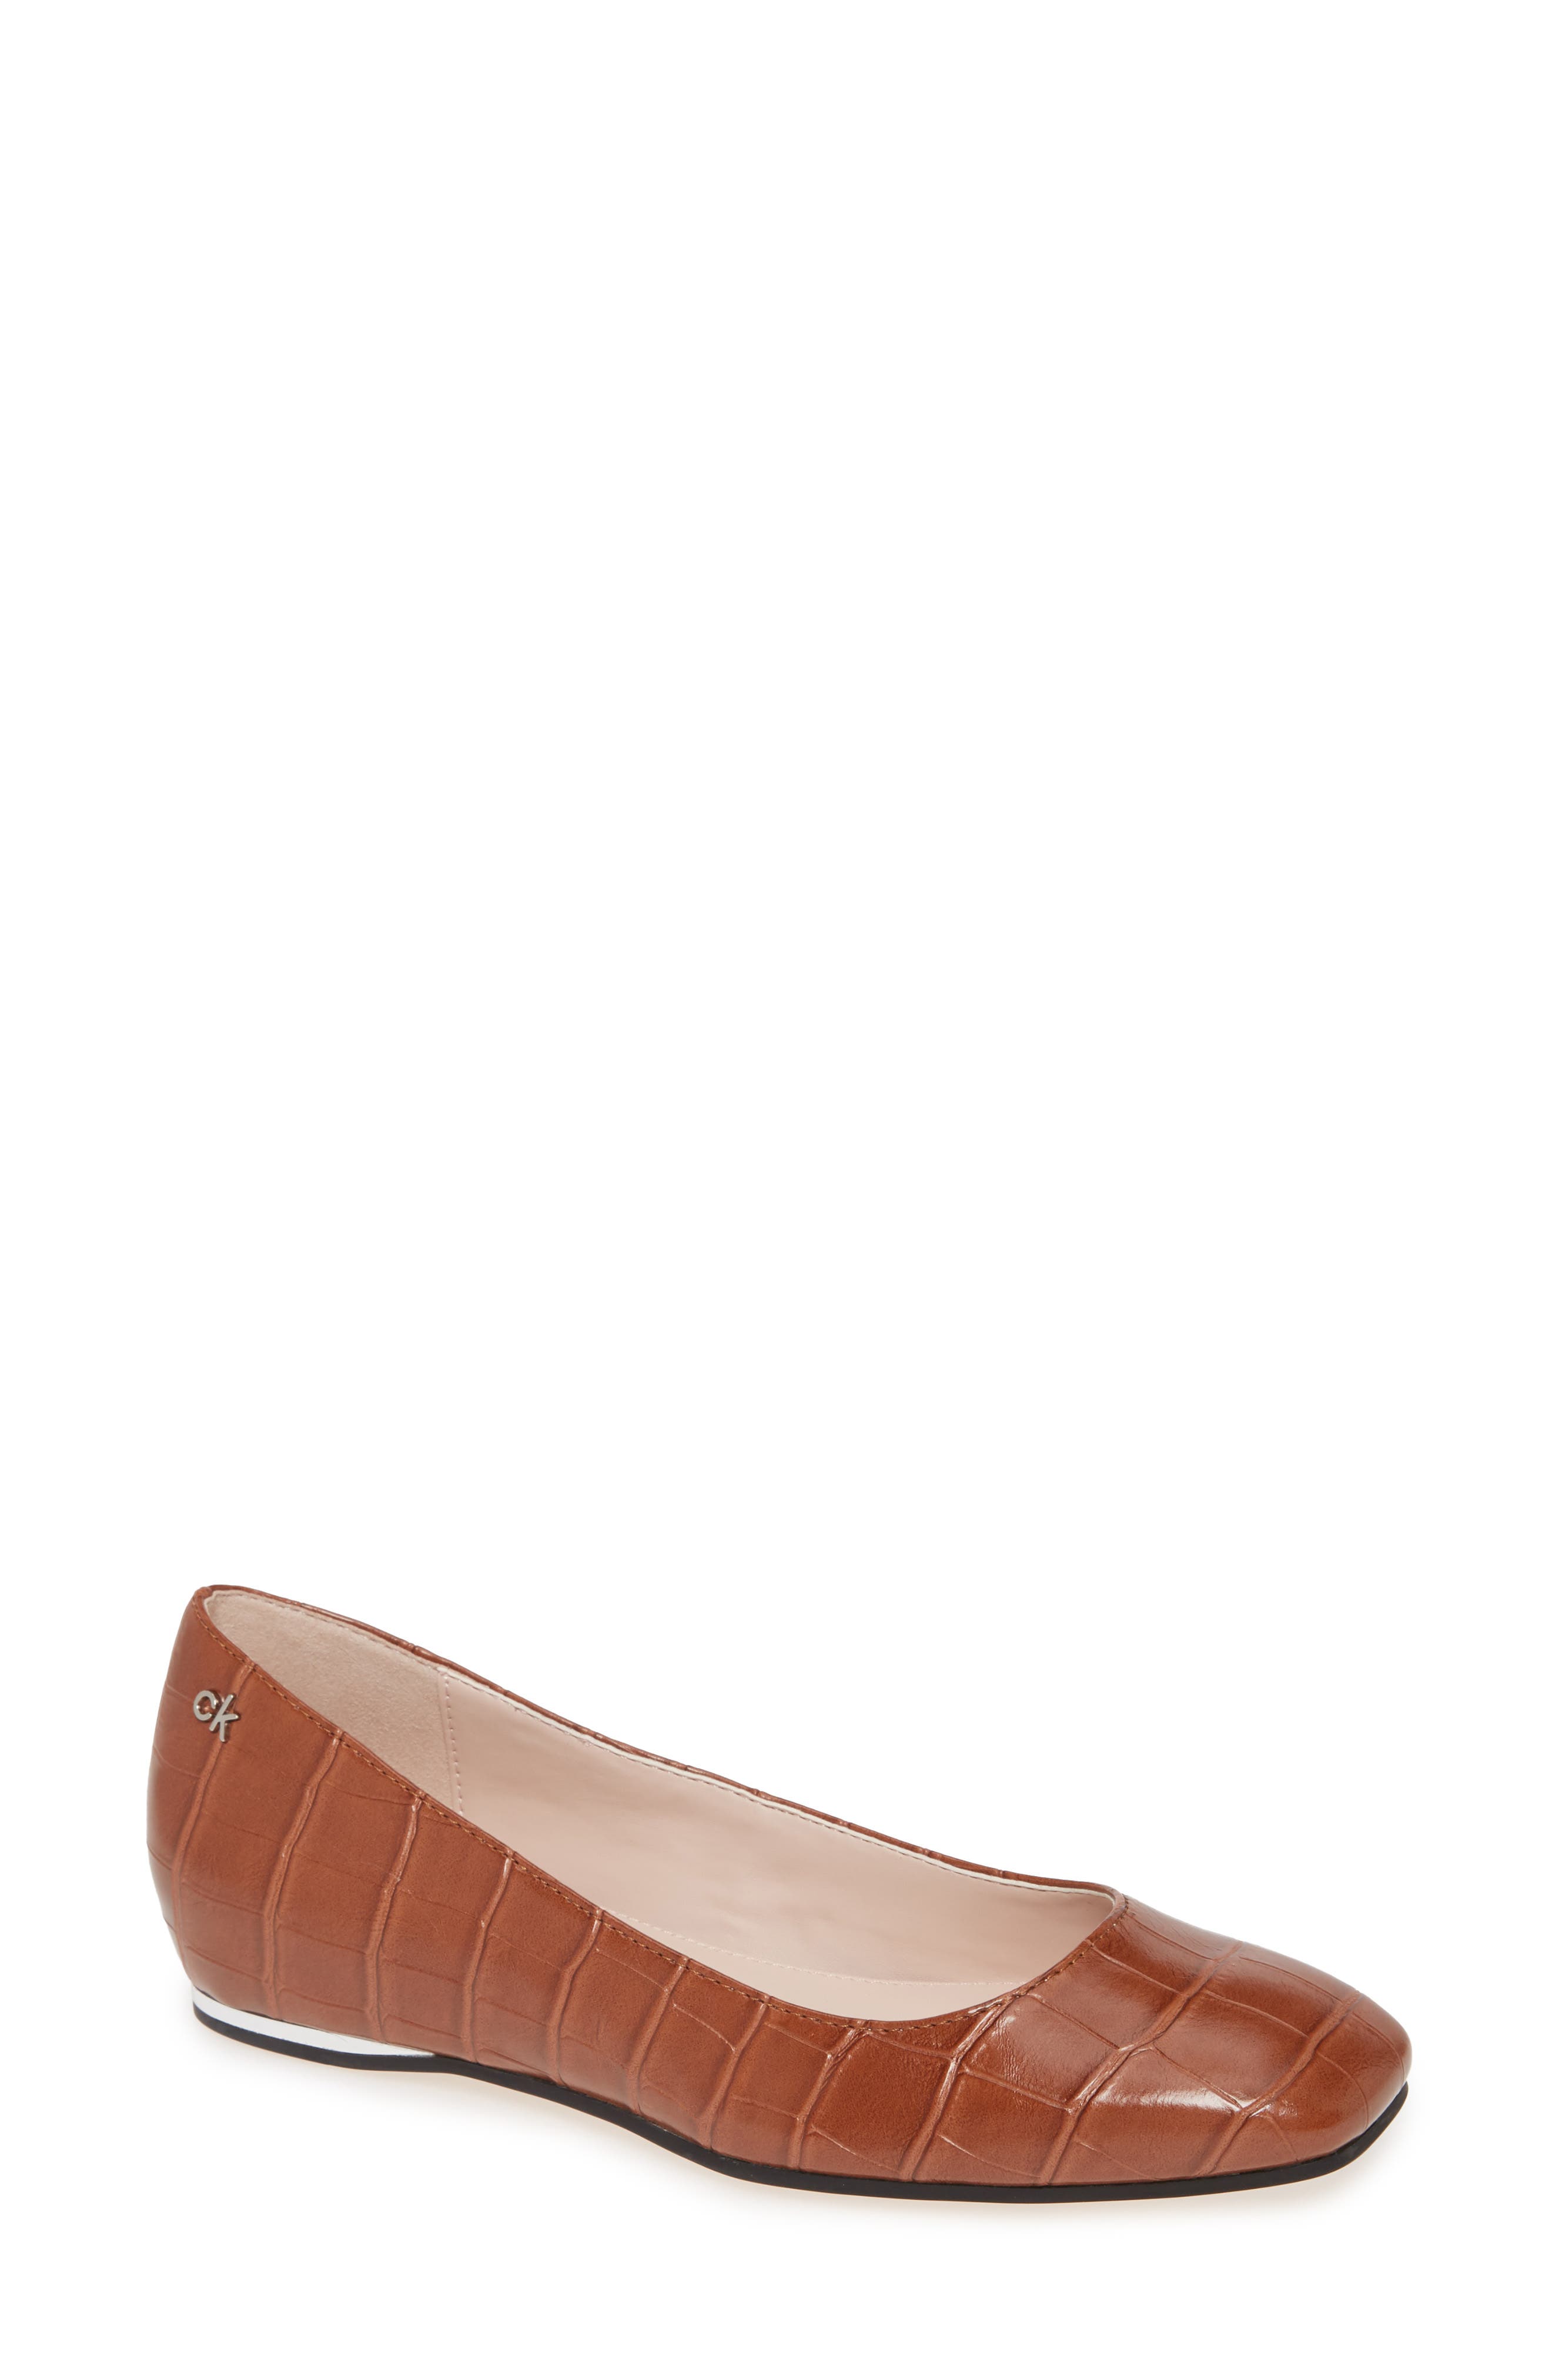 UPC 194060228938 product image for Women's Calvin Klein Heidy Skimmer Flat, Size 6 M - Brown | upcitemdb.com